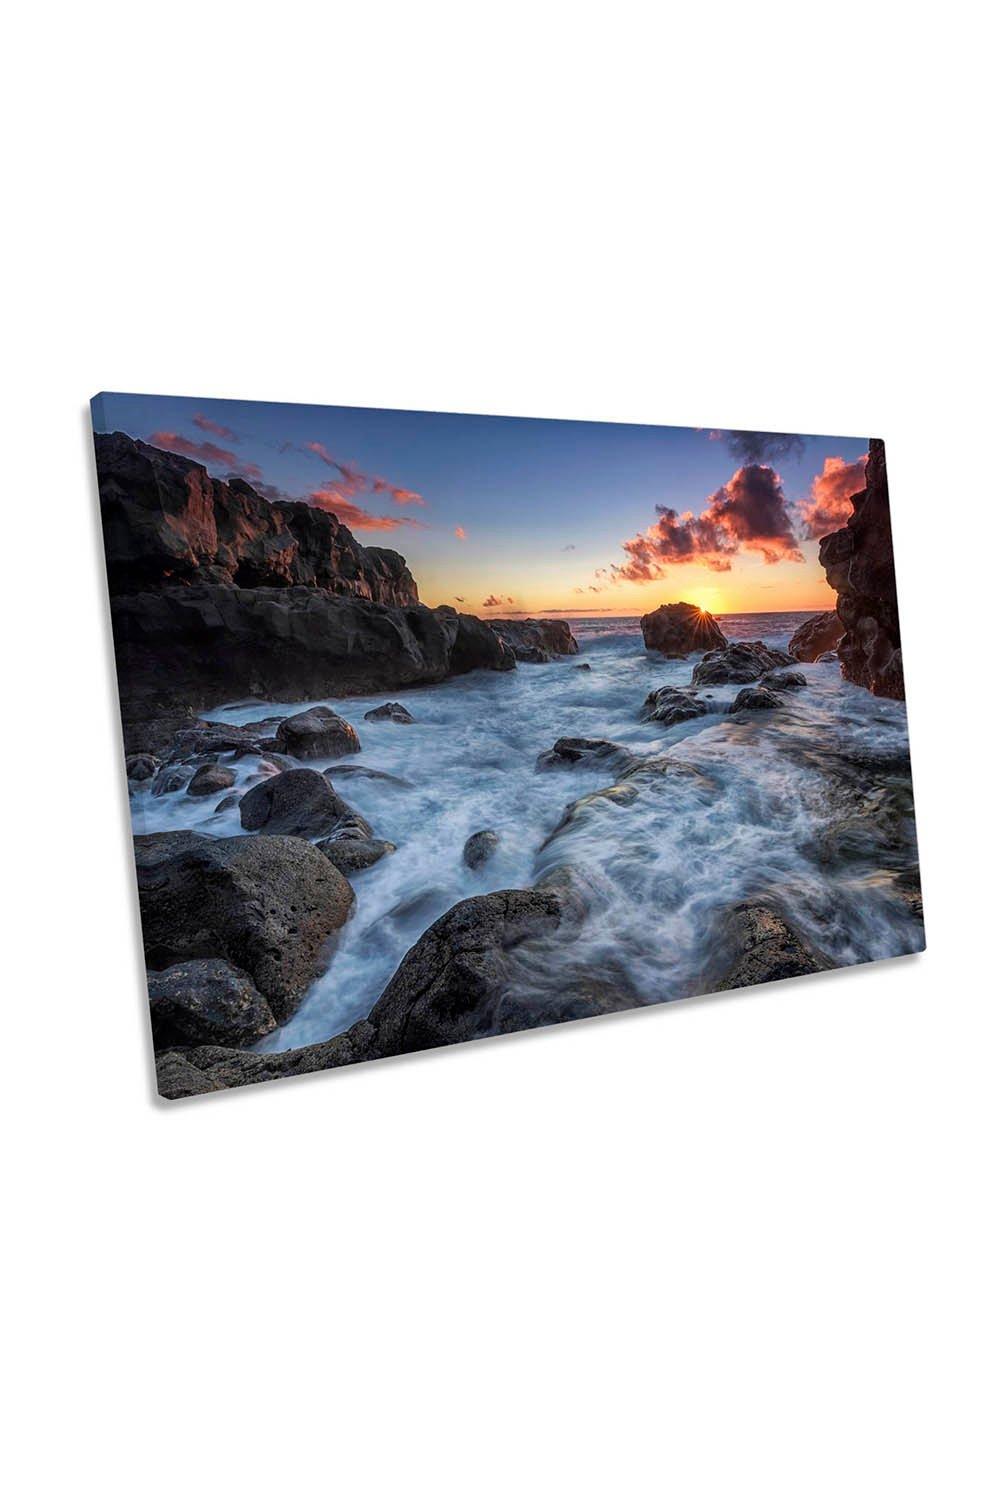 Sunstars Rocks Coastal Beach Seascape Canvas Wall Art Picture Print